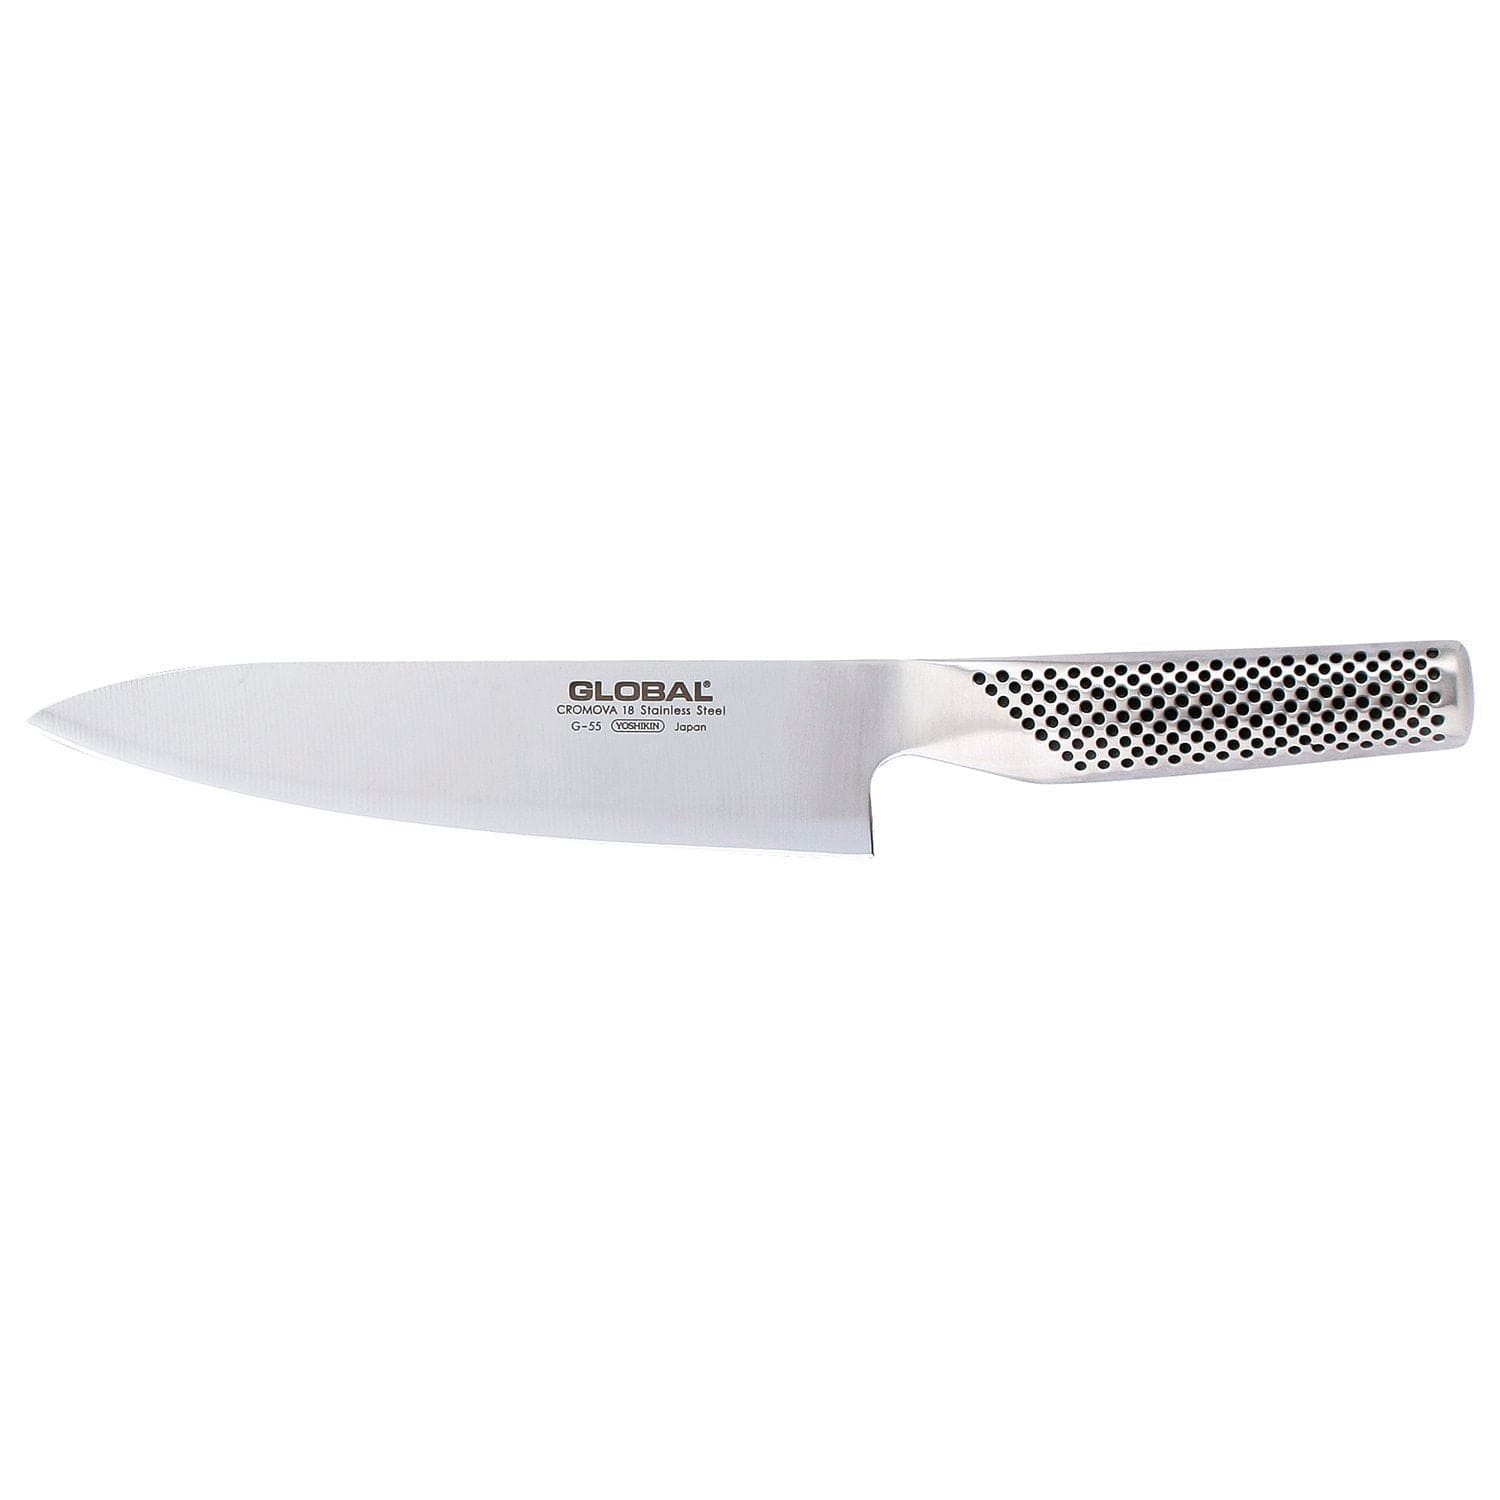 Global G 55 Chefův nůž, 18 cm